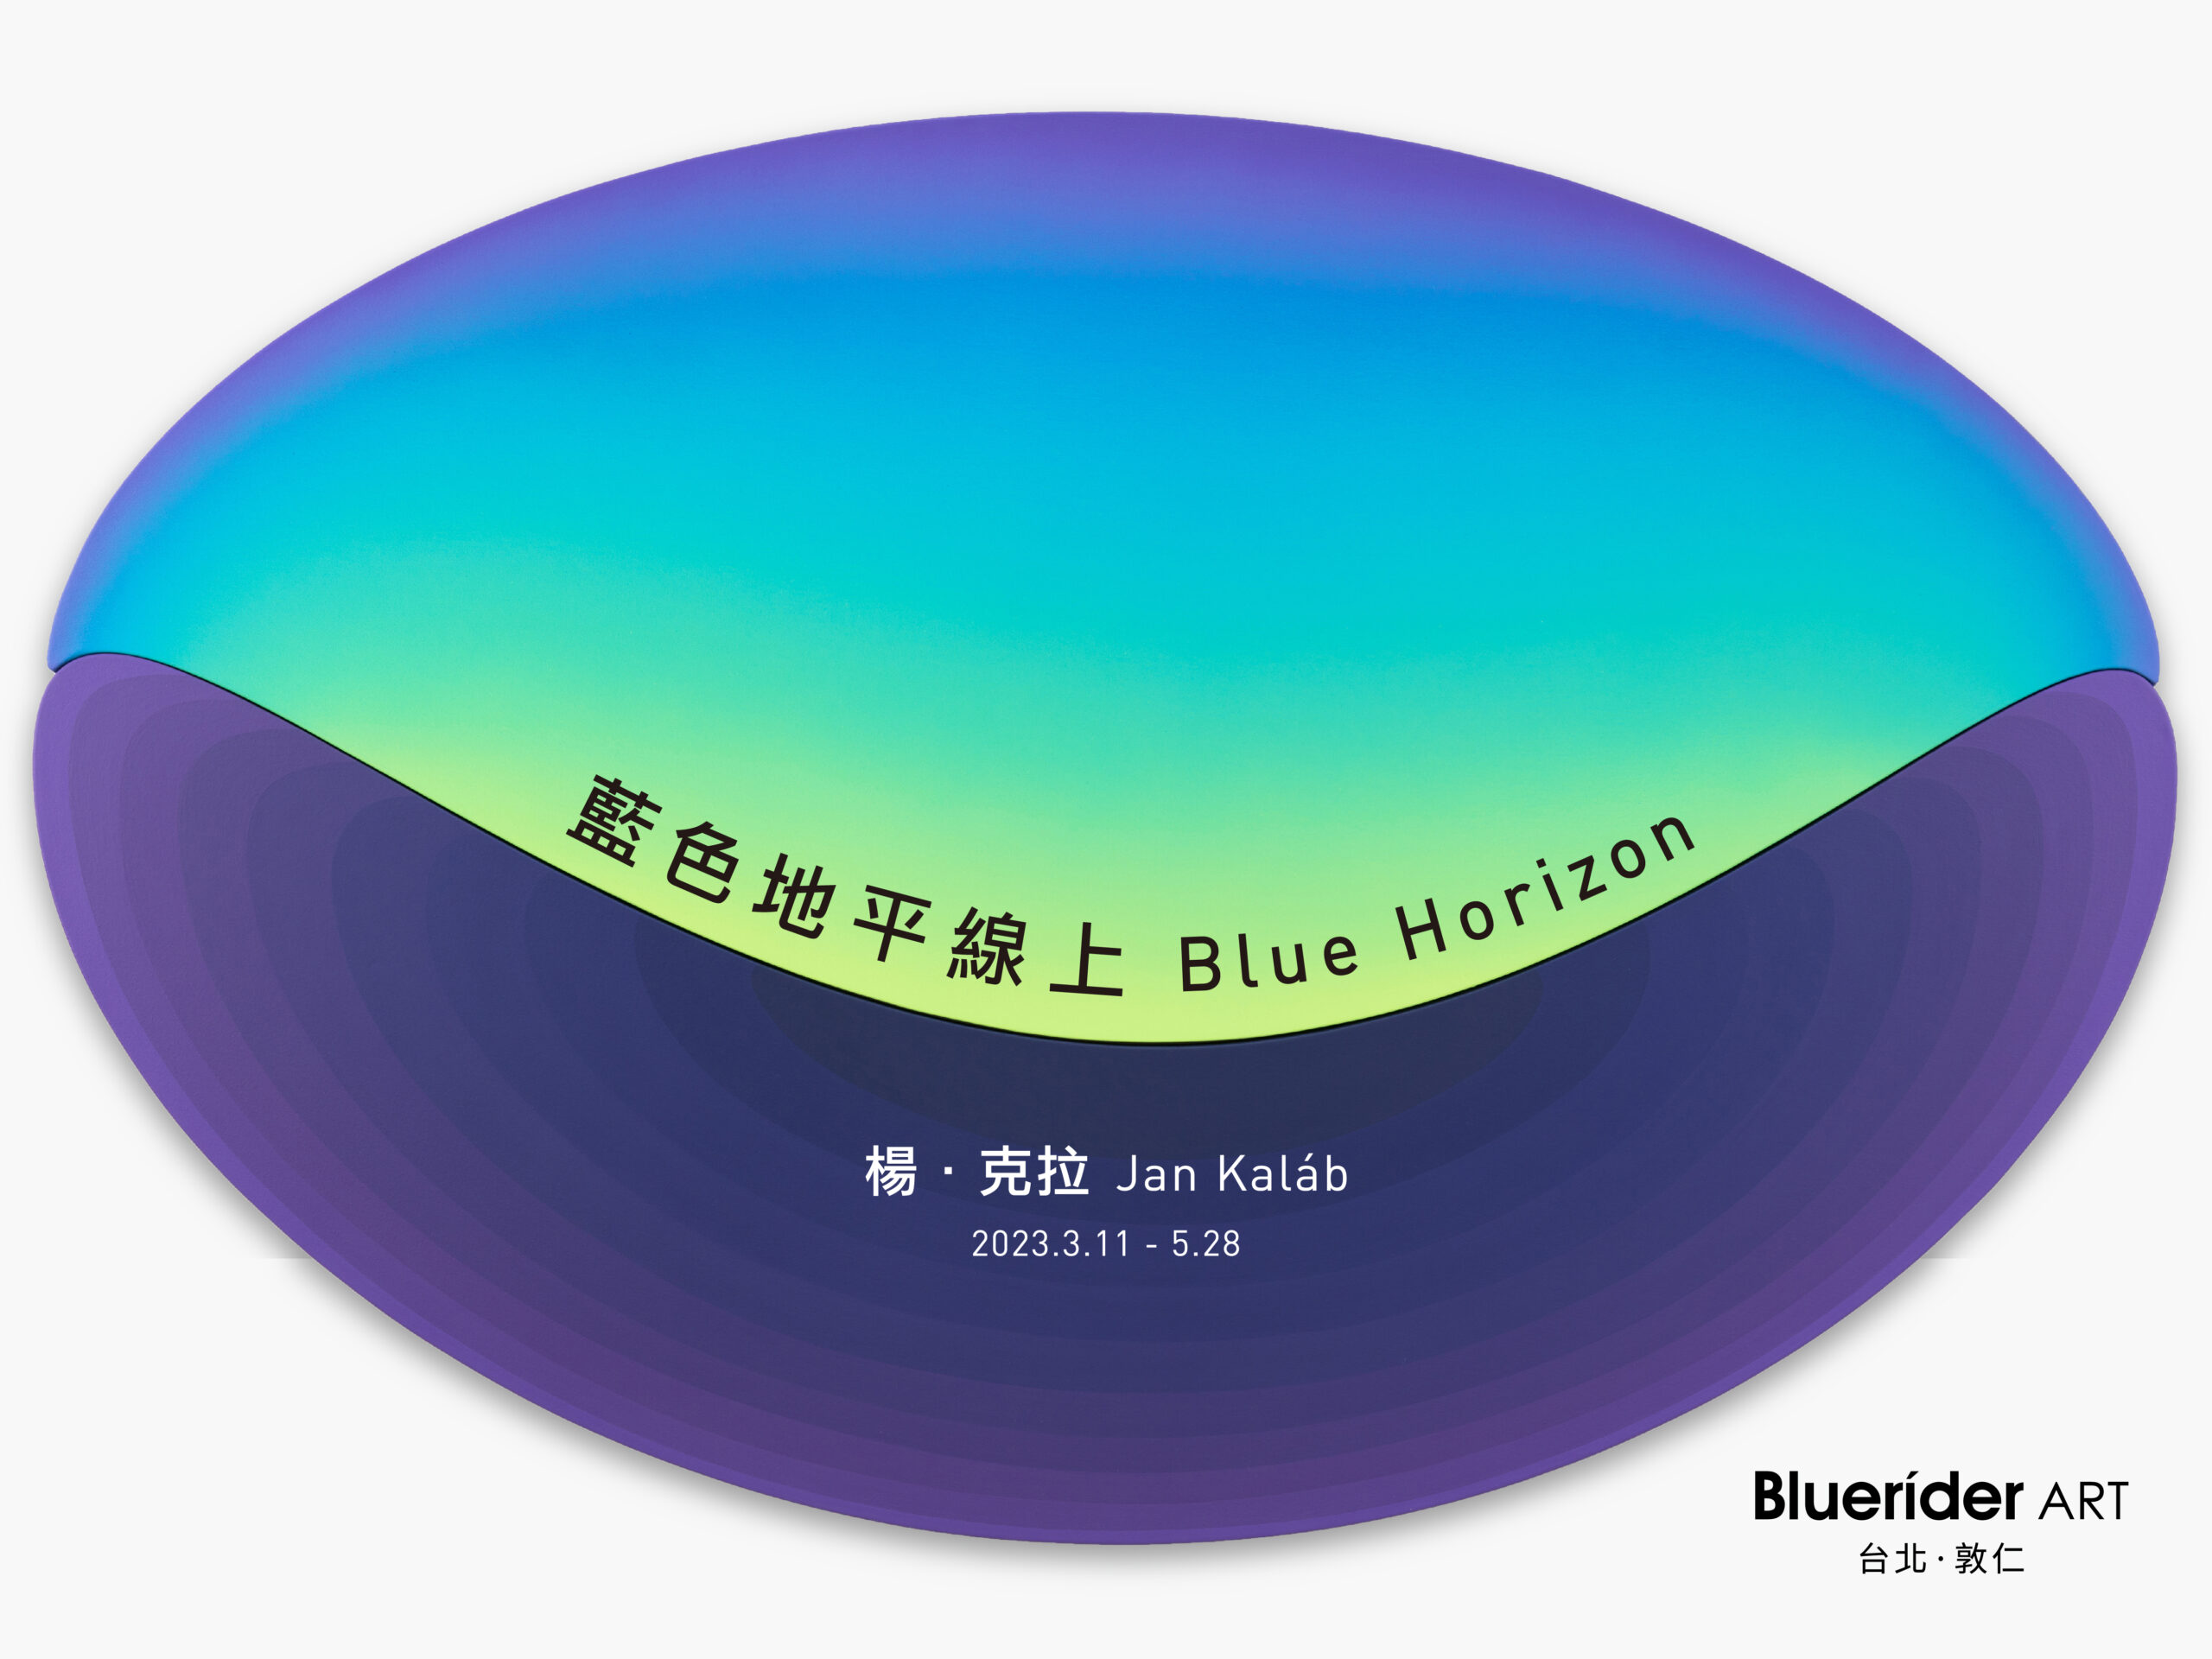 Bluerider ART 新展預告 藍色地平線上 Blue Horizon 台北・敦仁